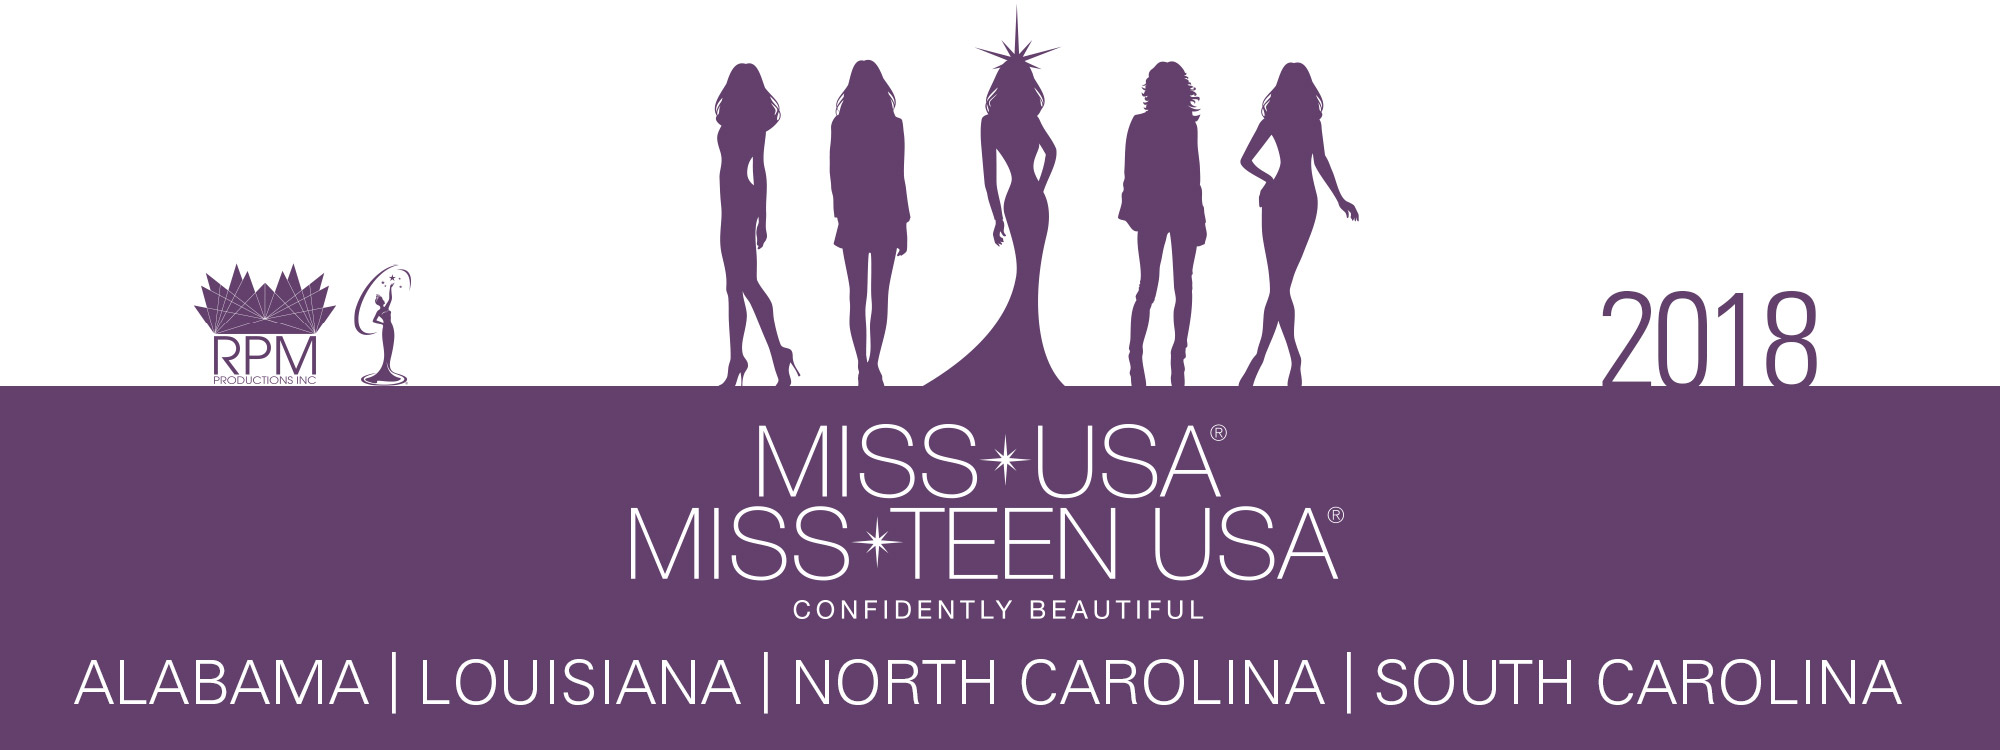 Miss Usa Logo and Image